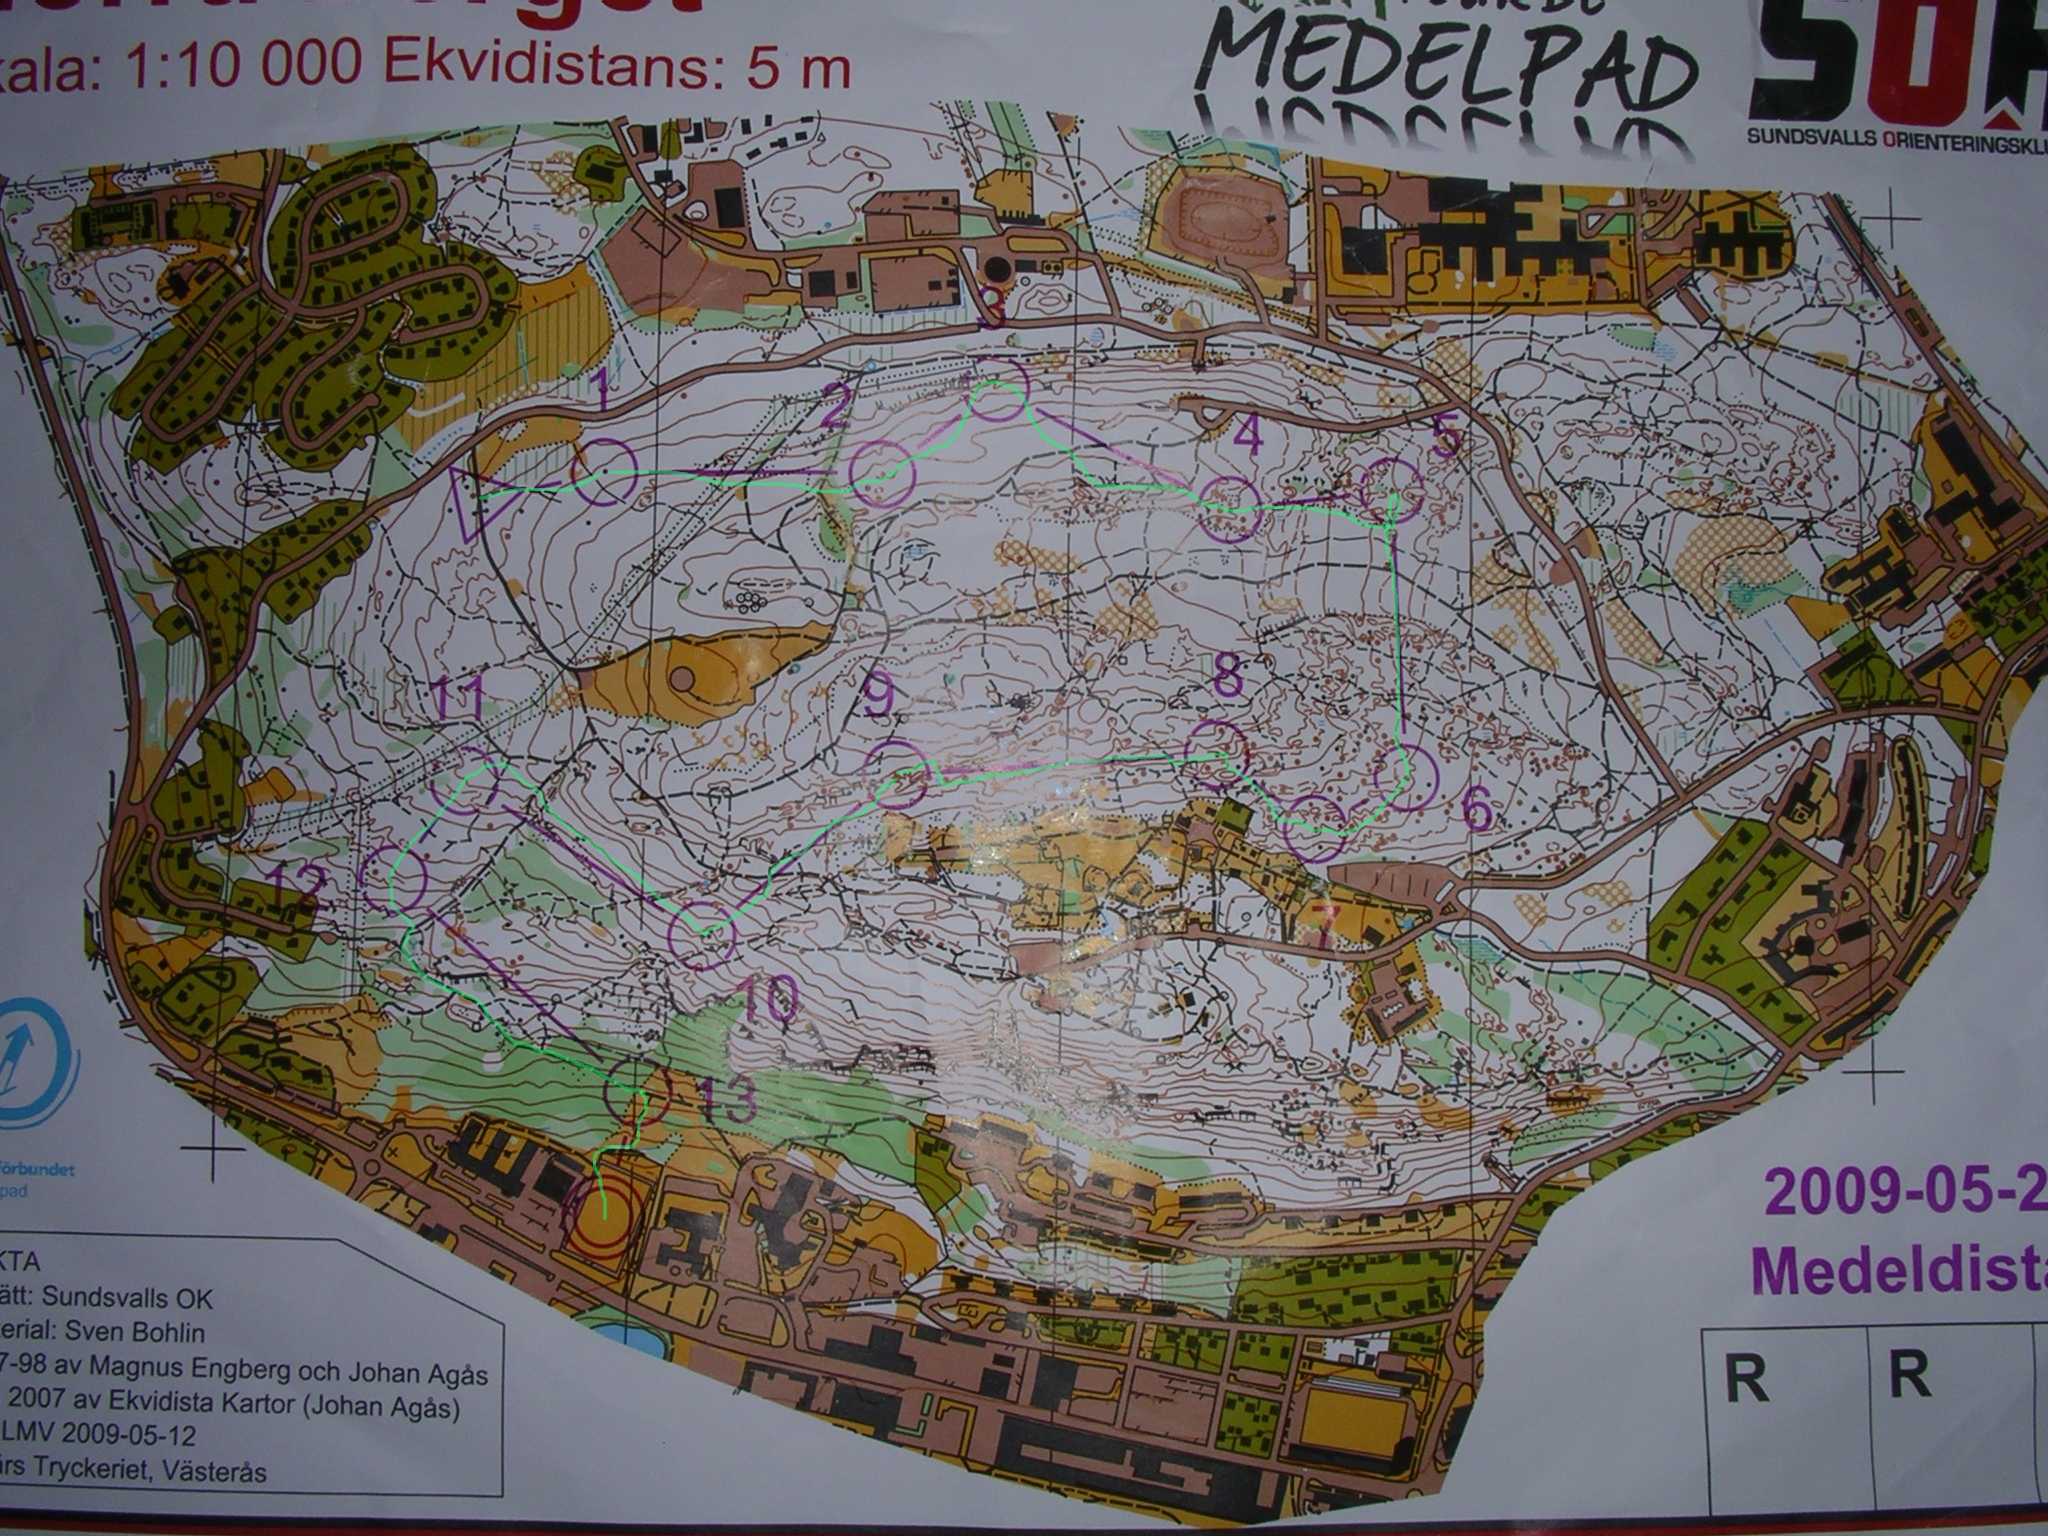 Tour de Medelpad - Sundsvallsträffen Medel (21/05/2009)